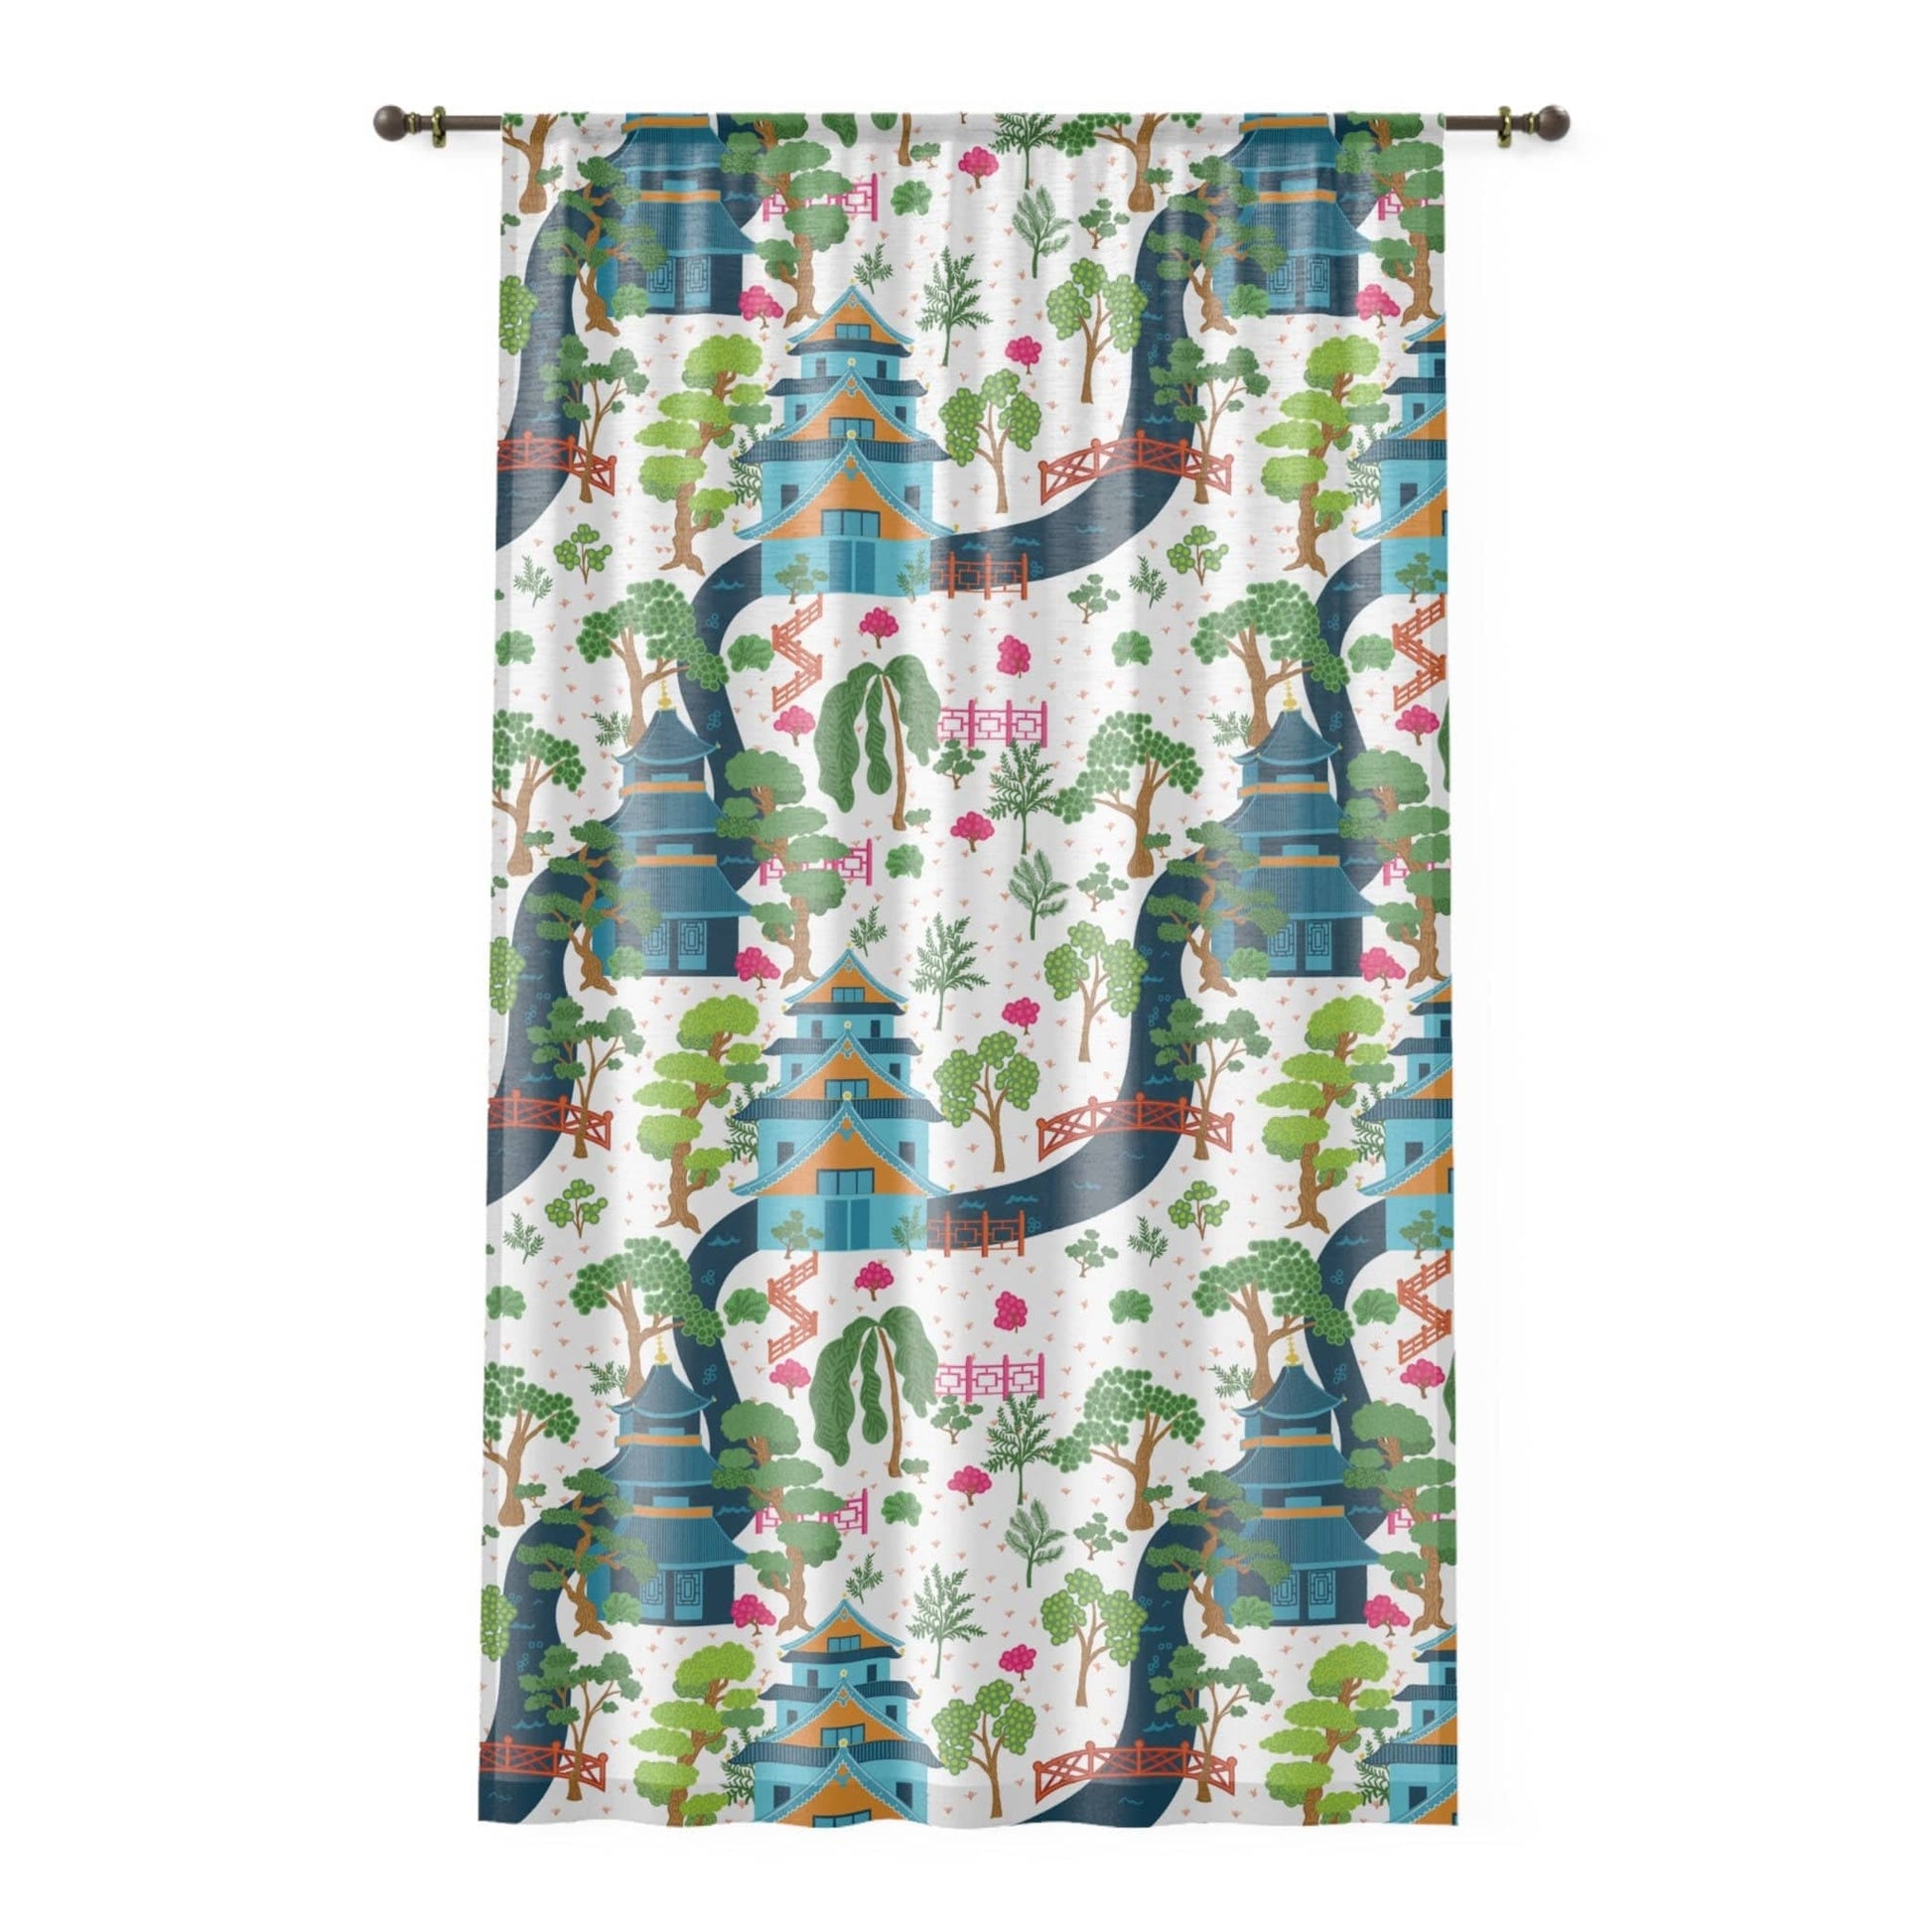 Chinoiserie Pagoda Floral Tablecloth, Country Chic, Farmhouse Table Li –  Kate McEnroe New York